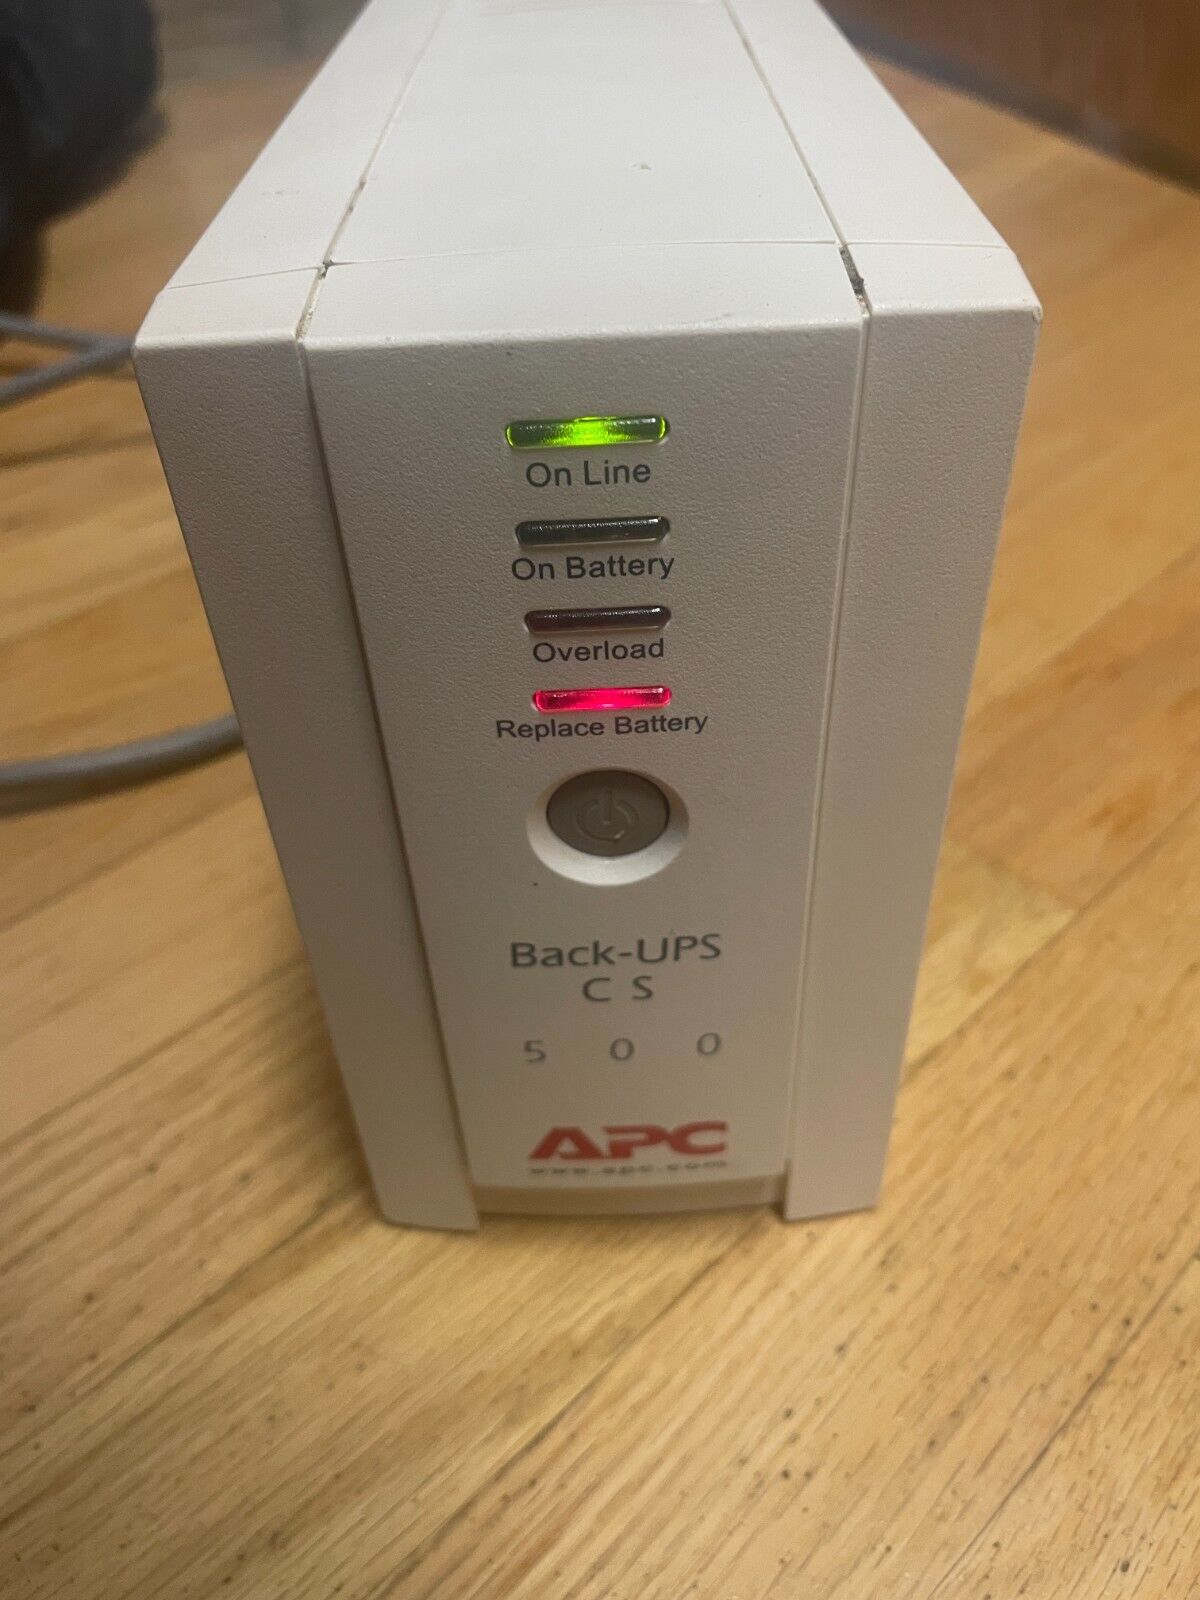 APC UPS CS 500 Back-UPS Backup & Surge Protection BK500 No Battery, Works fine